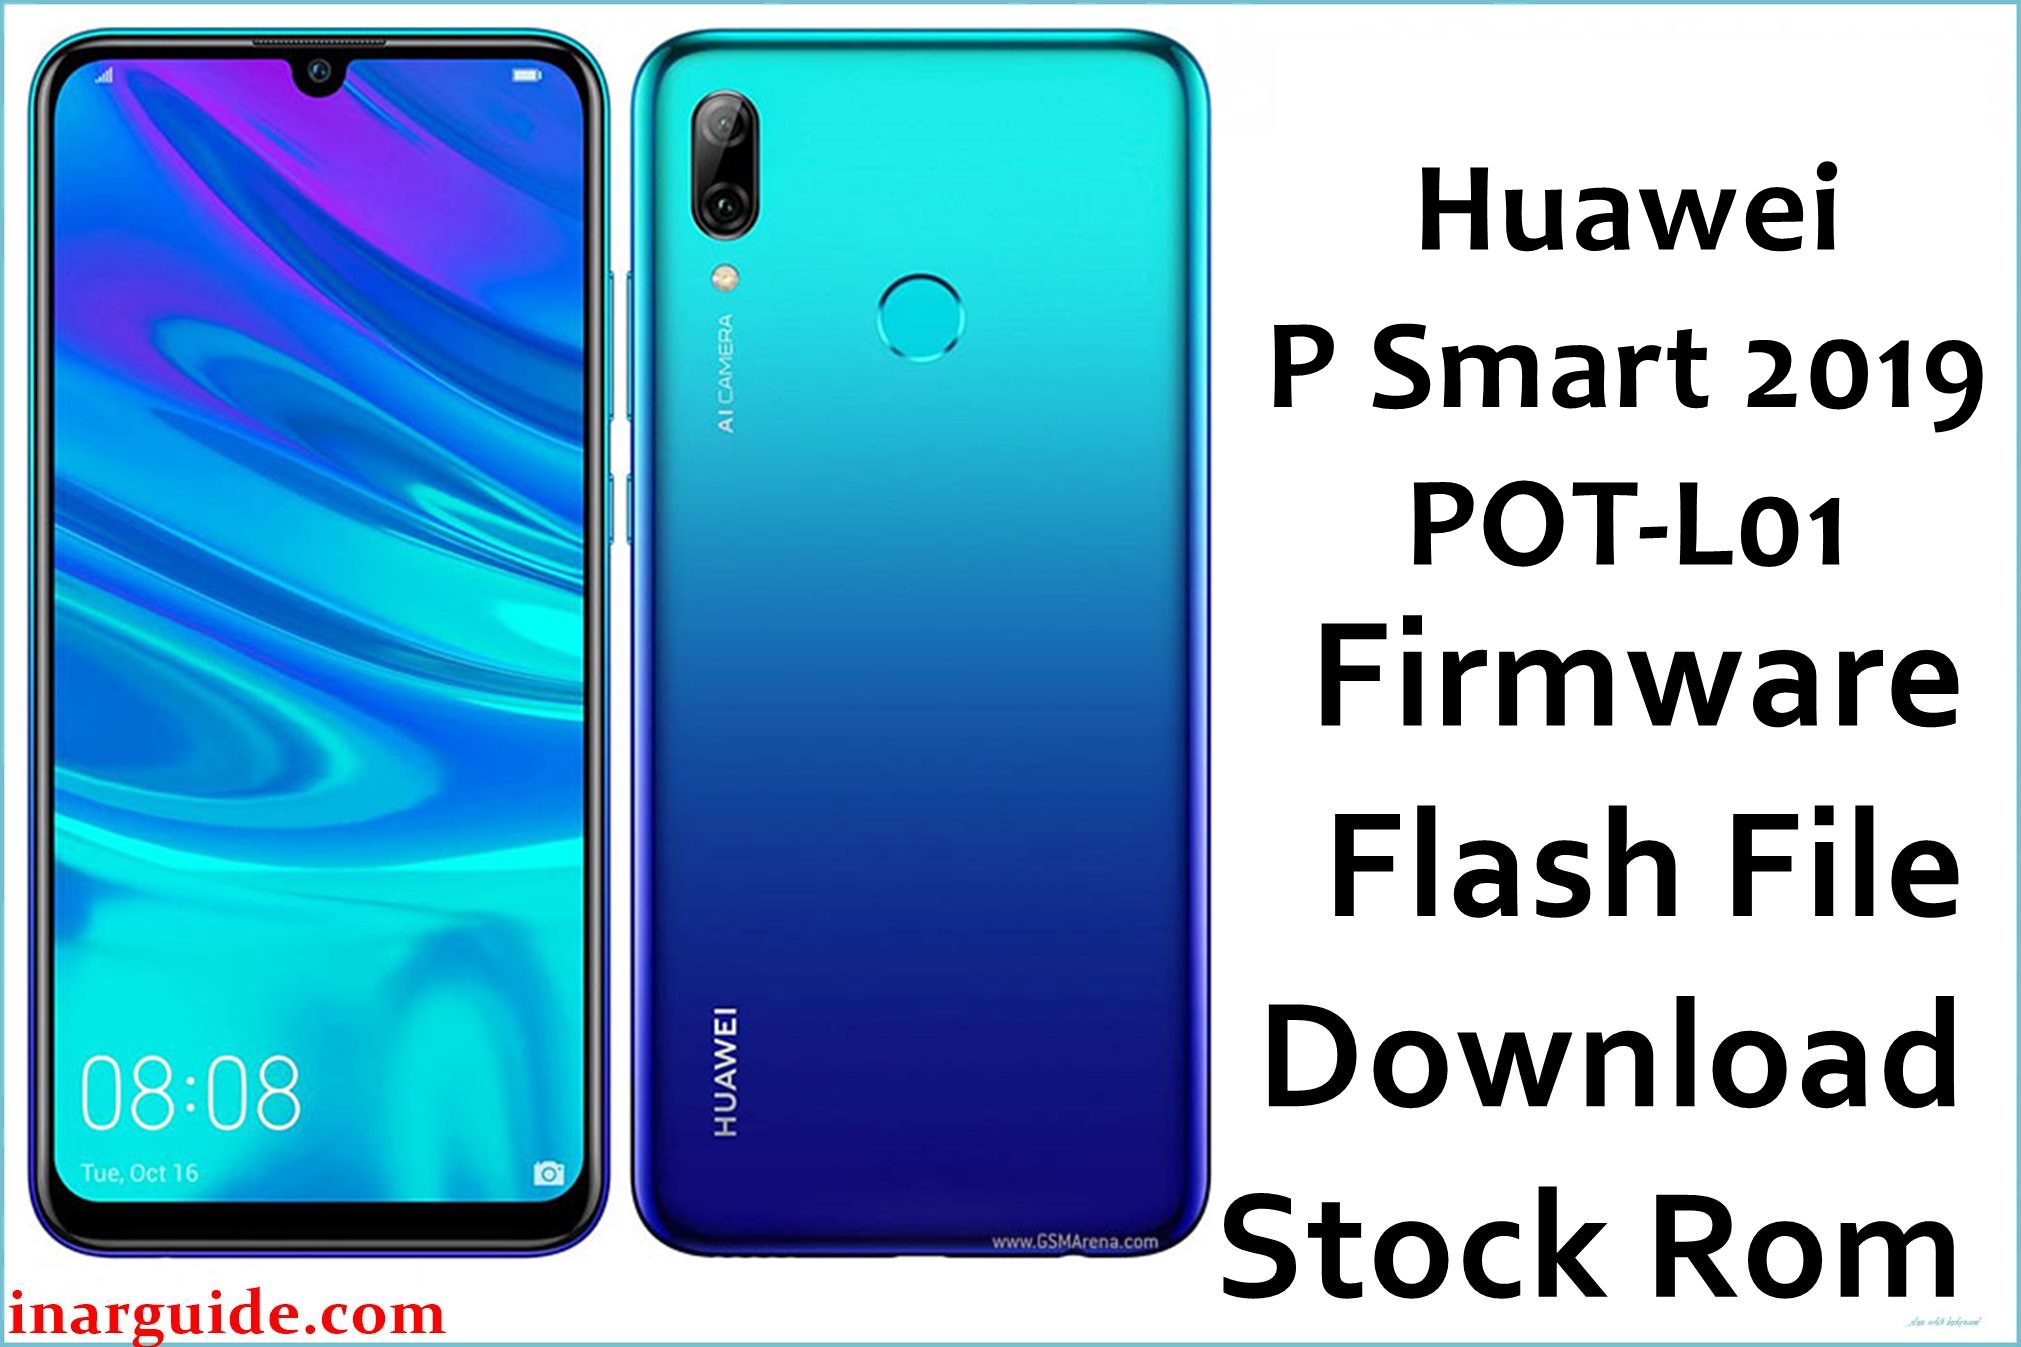 Huawei P Smart 2019 POT L01